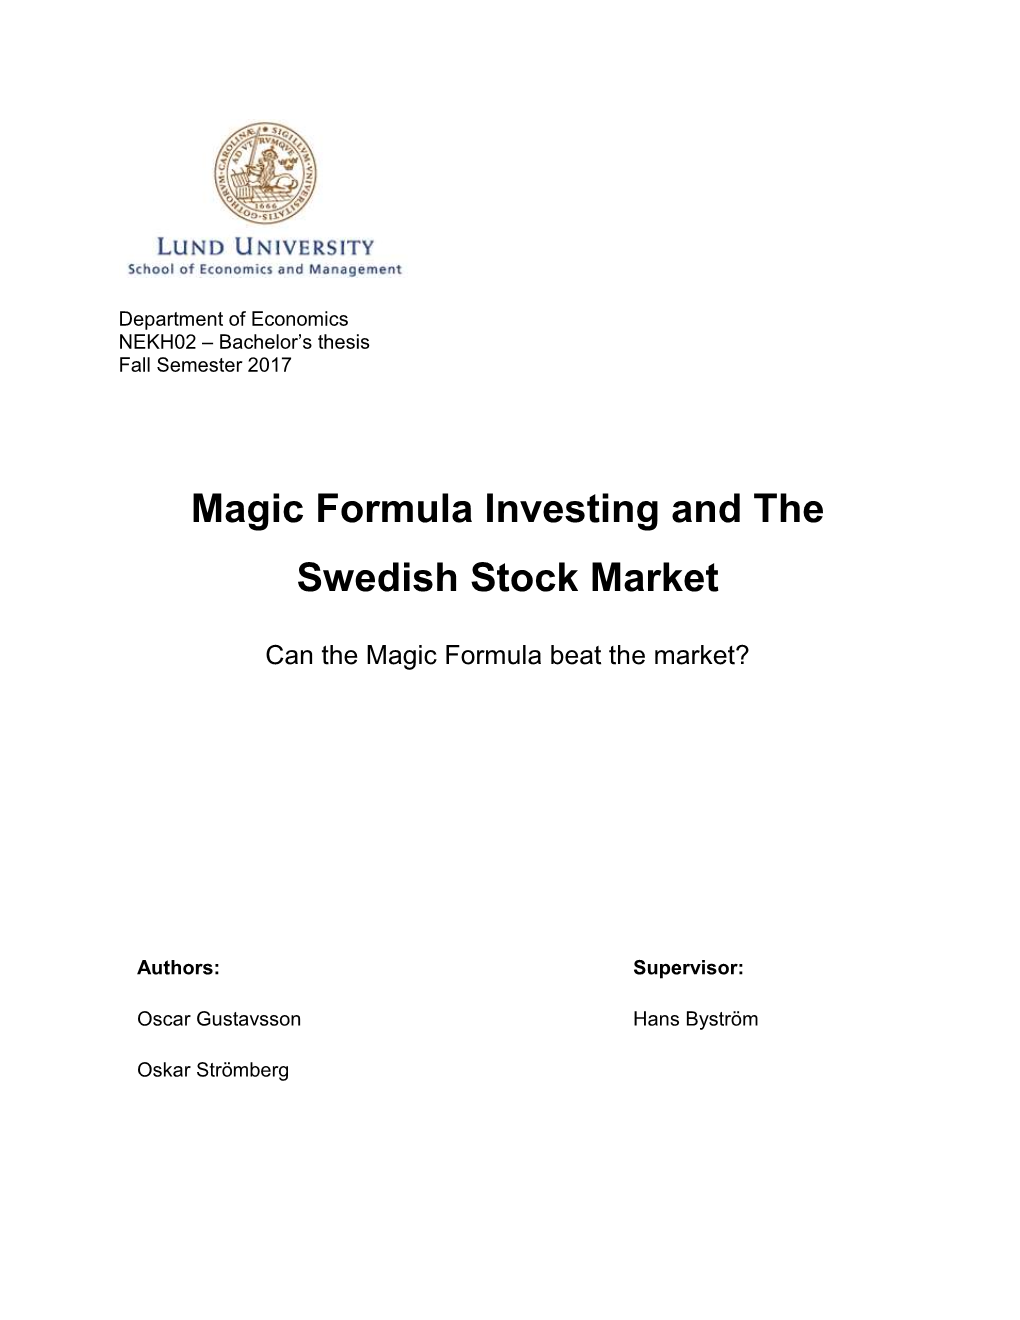 Magic Formula Investing and the Swedish Stock Market